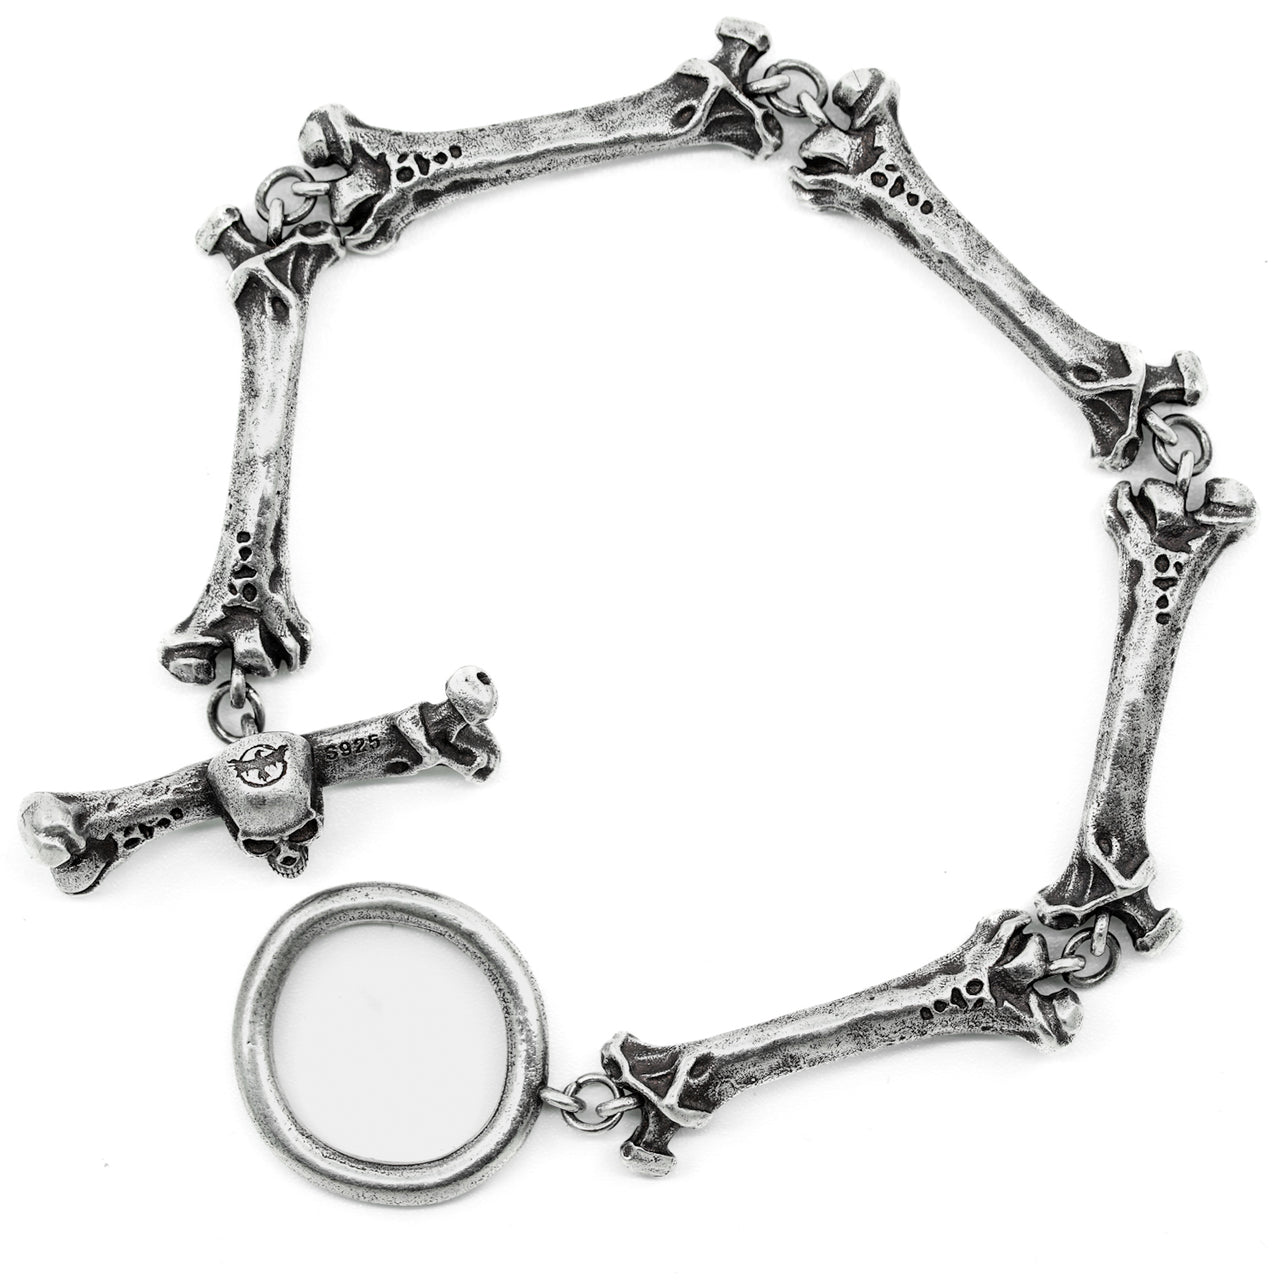 Top View Femurs Bracelet - Gothic Silver Bracelet - Black Feather Design